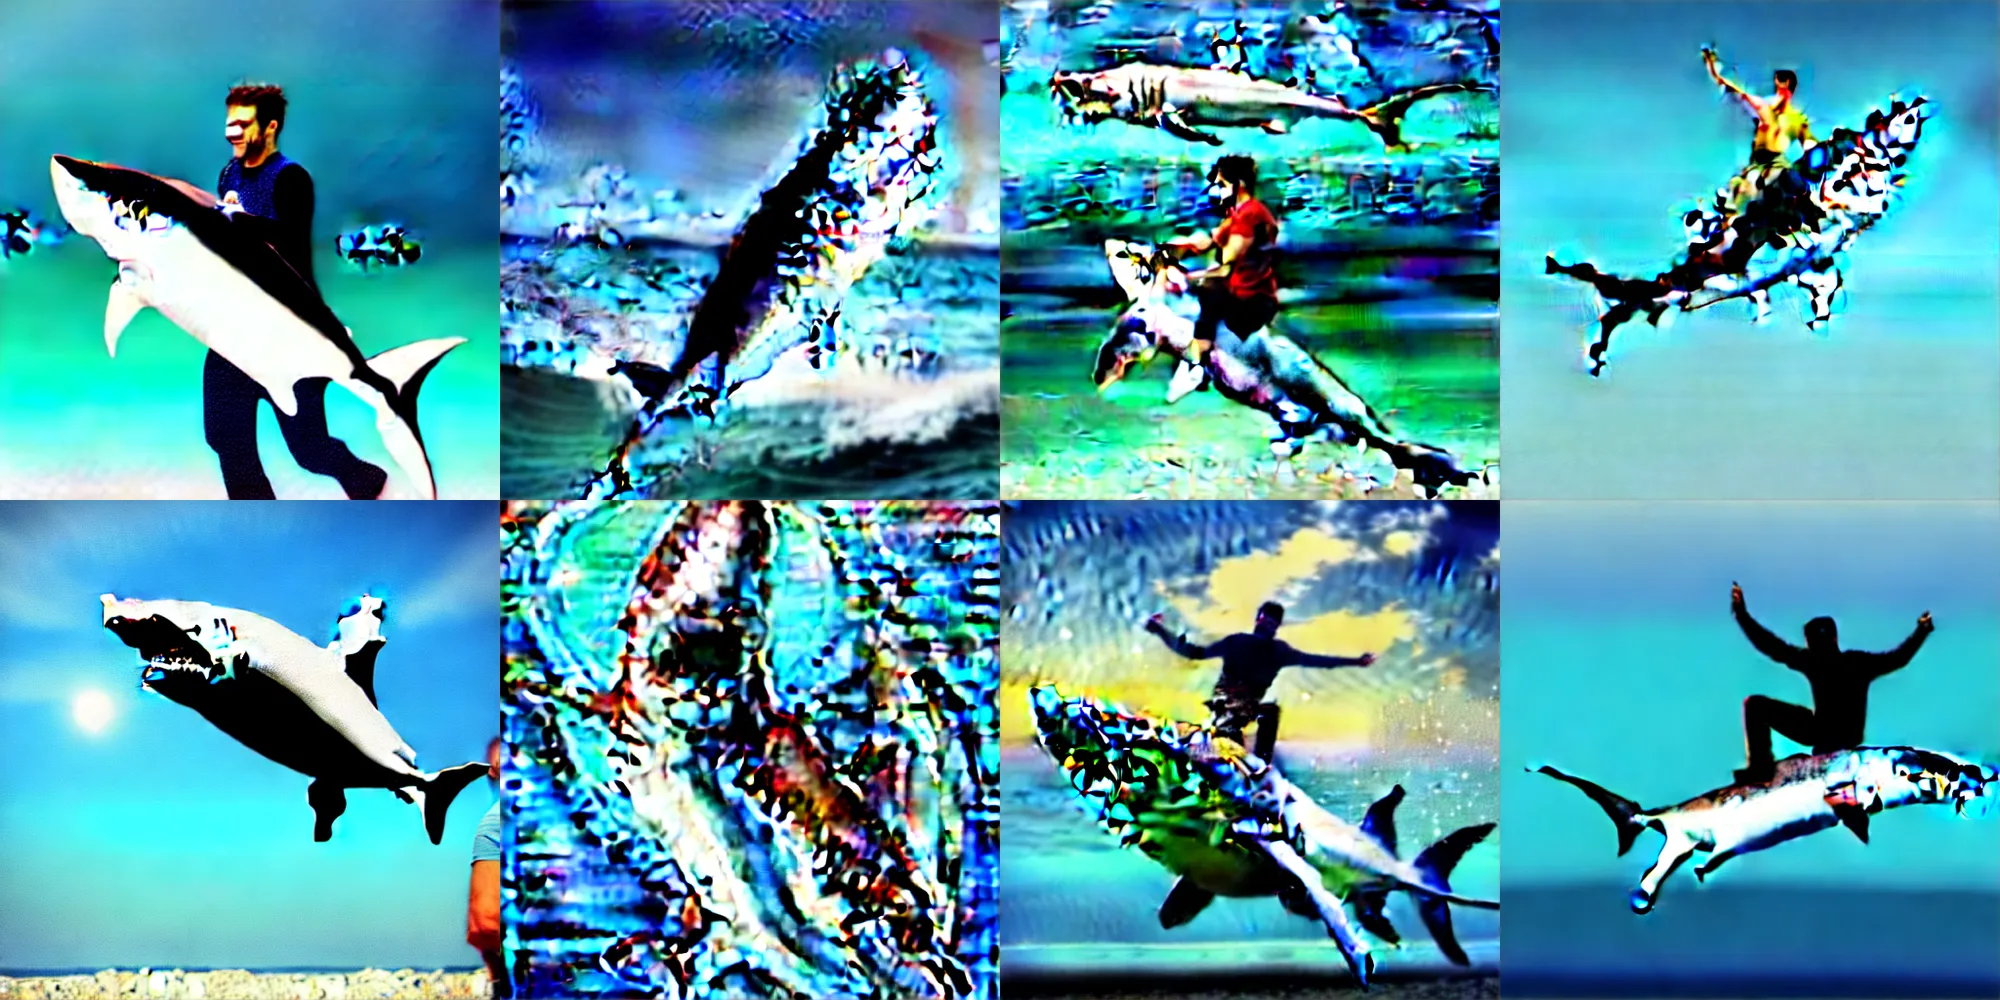 Image similar to Man riding a shark photorealistic photo